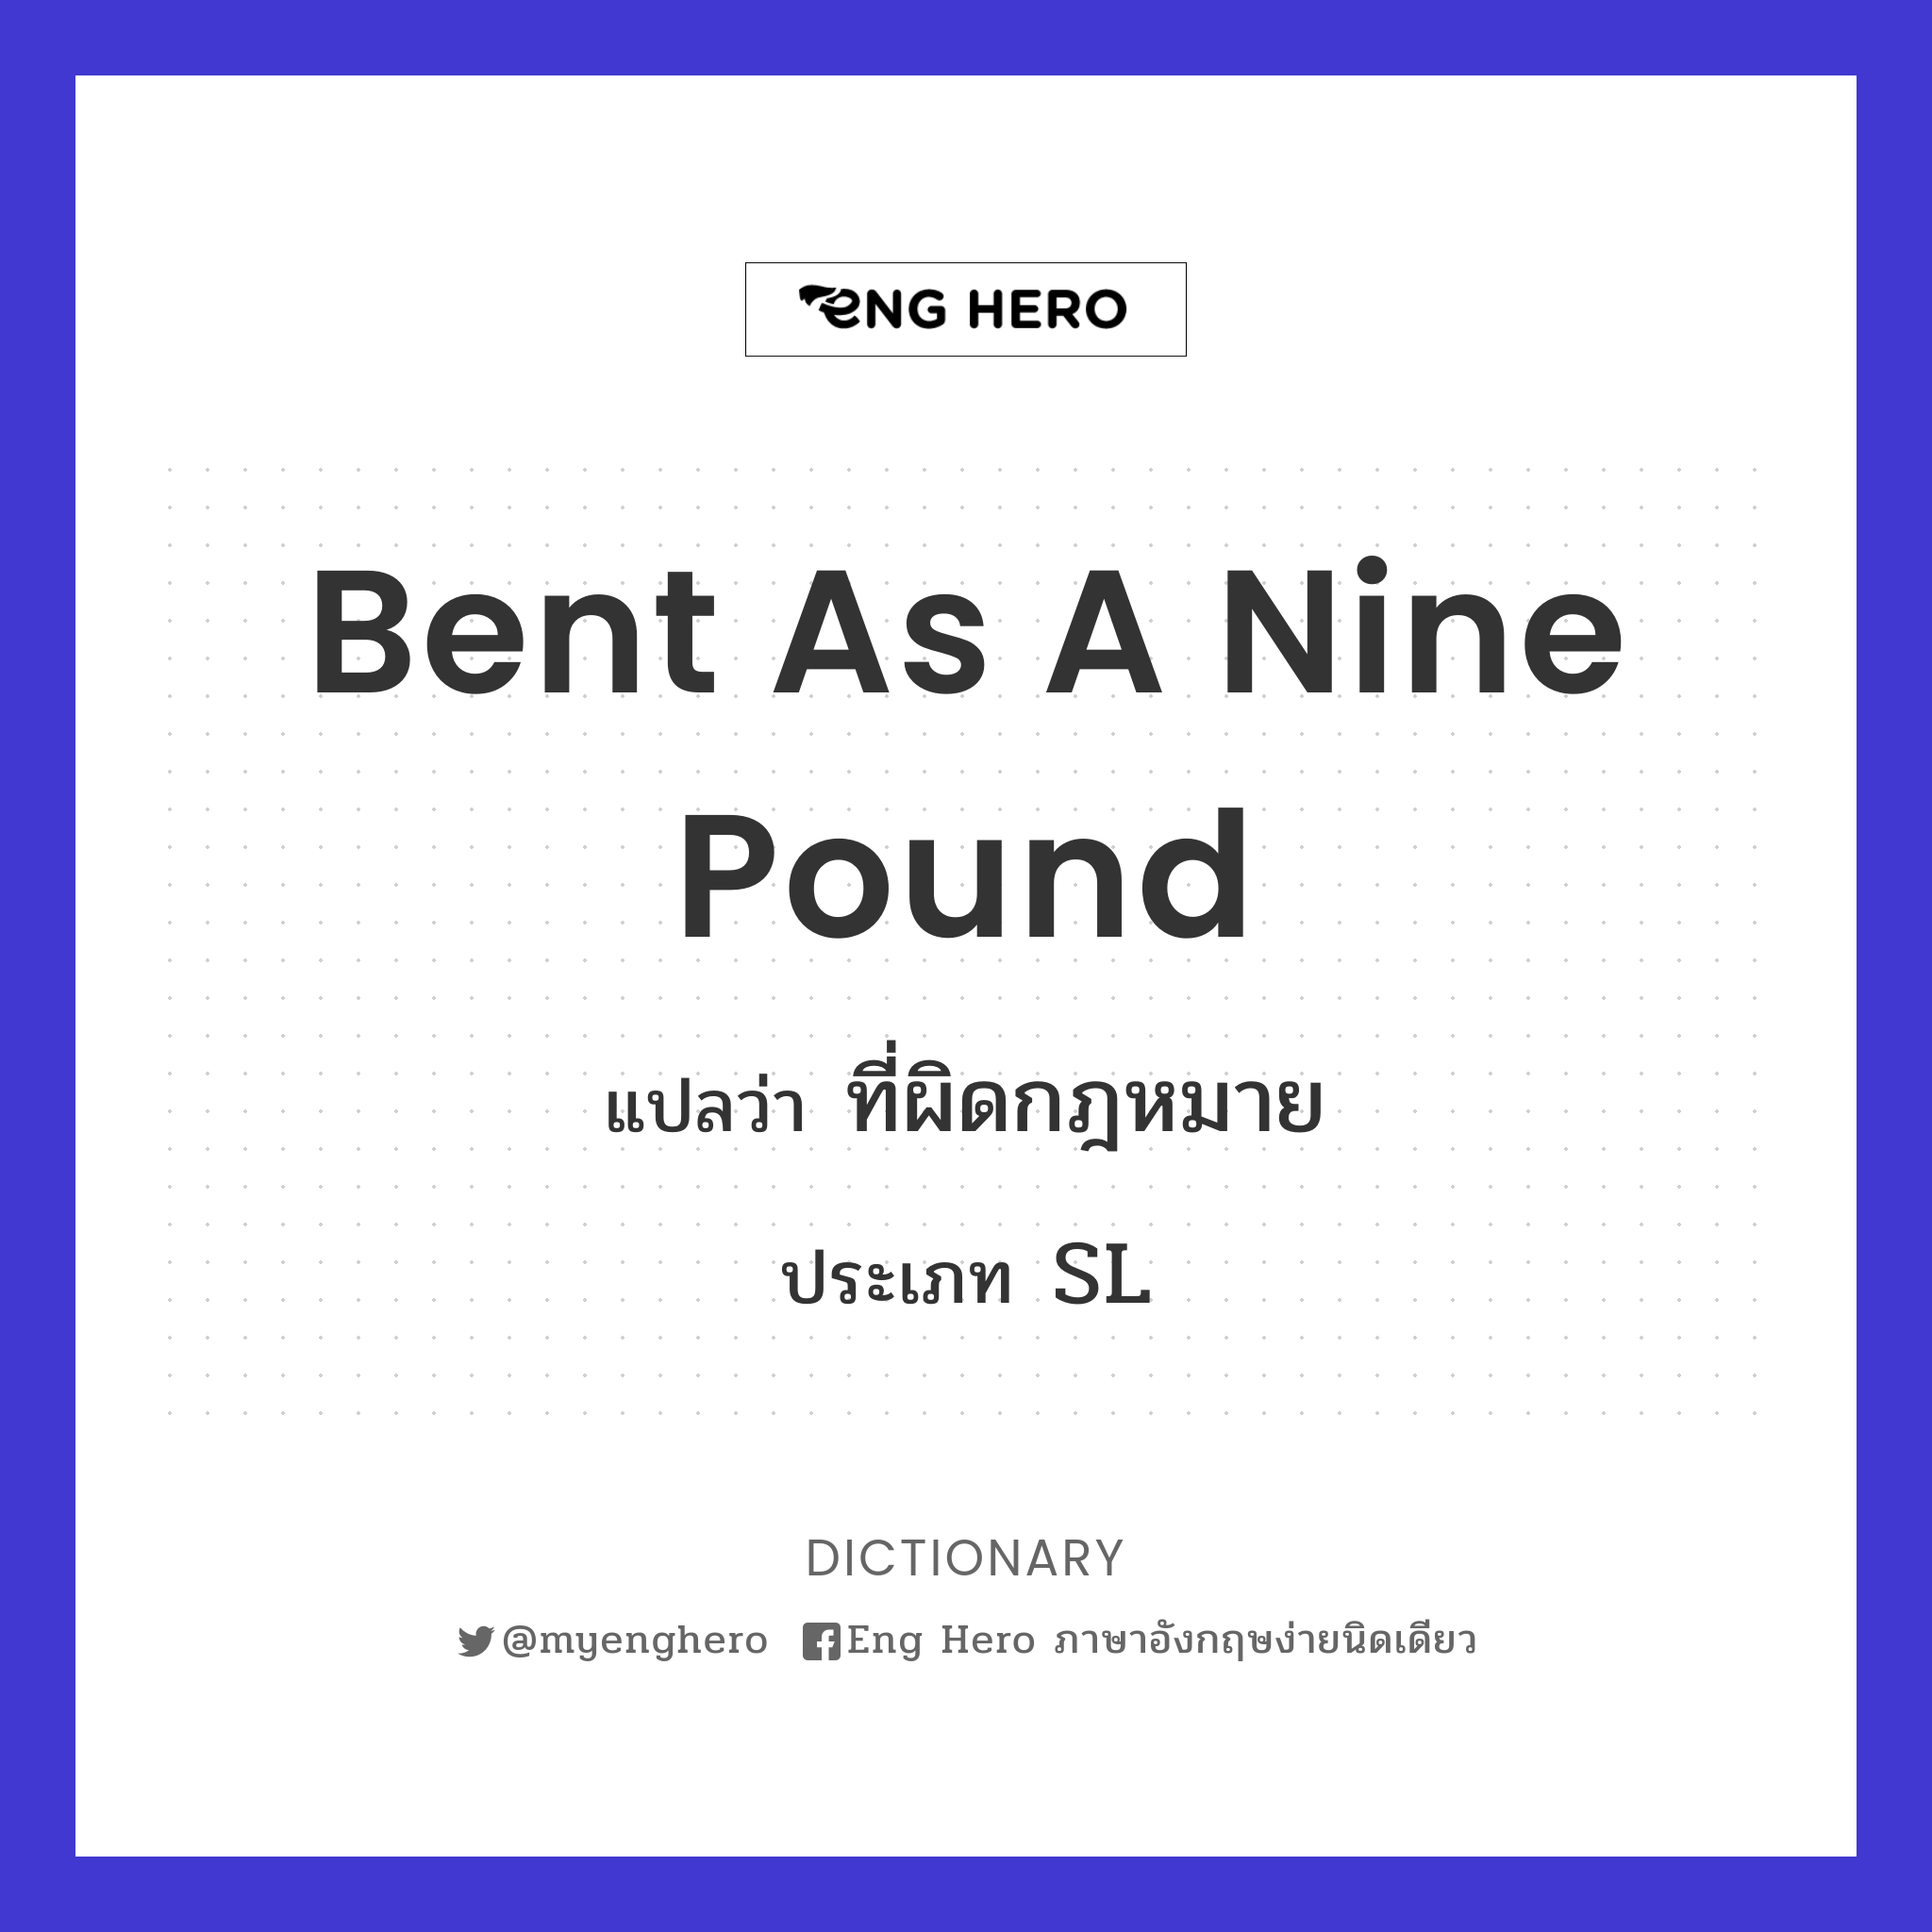 bent as a nine pound